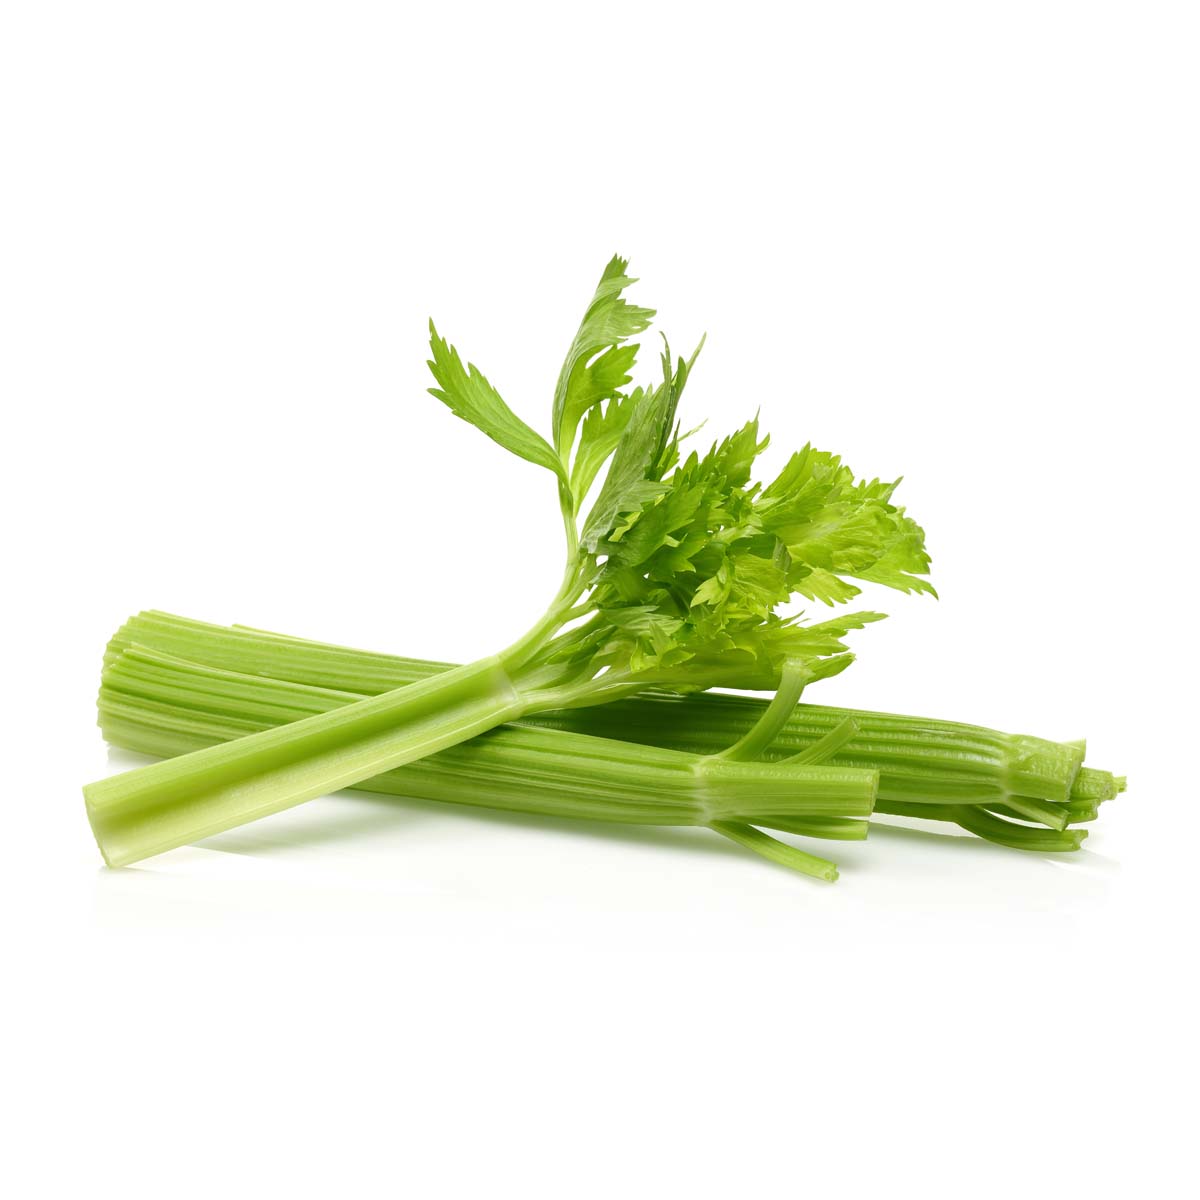 Celery seed extract